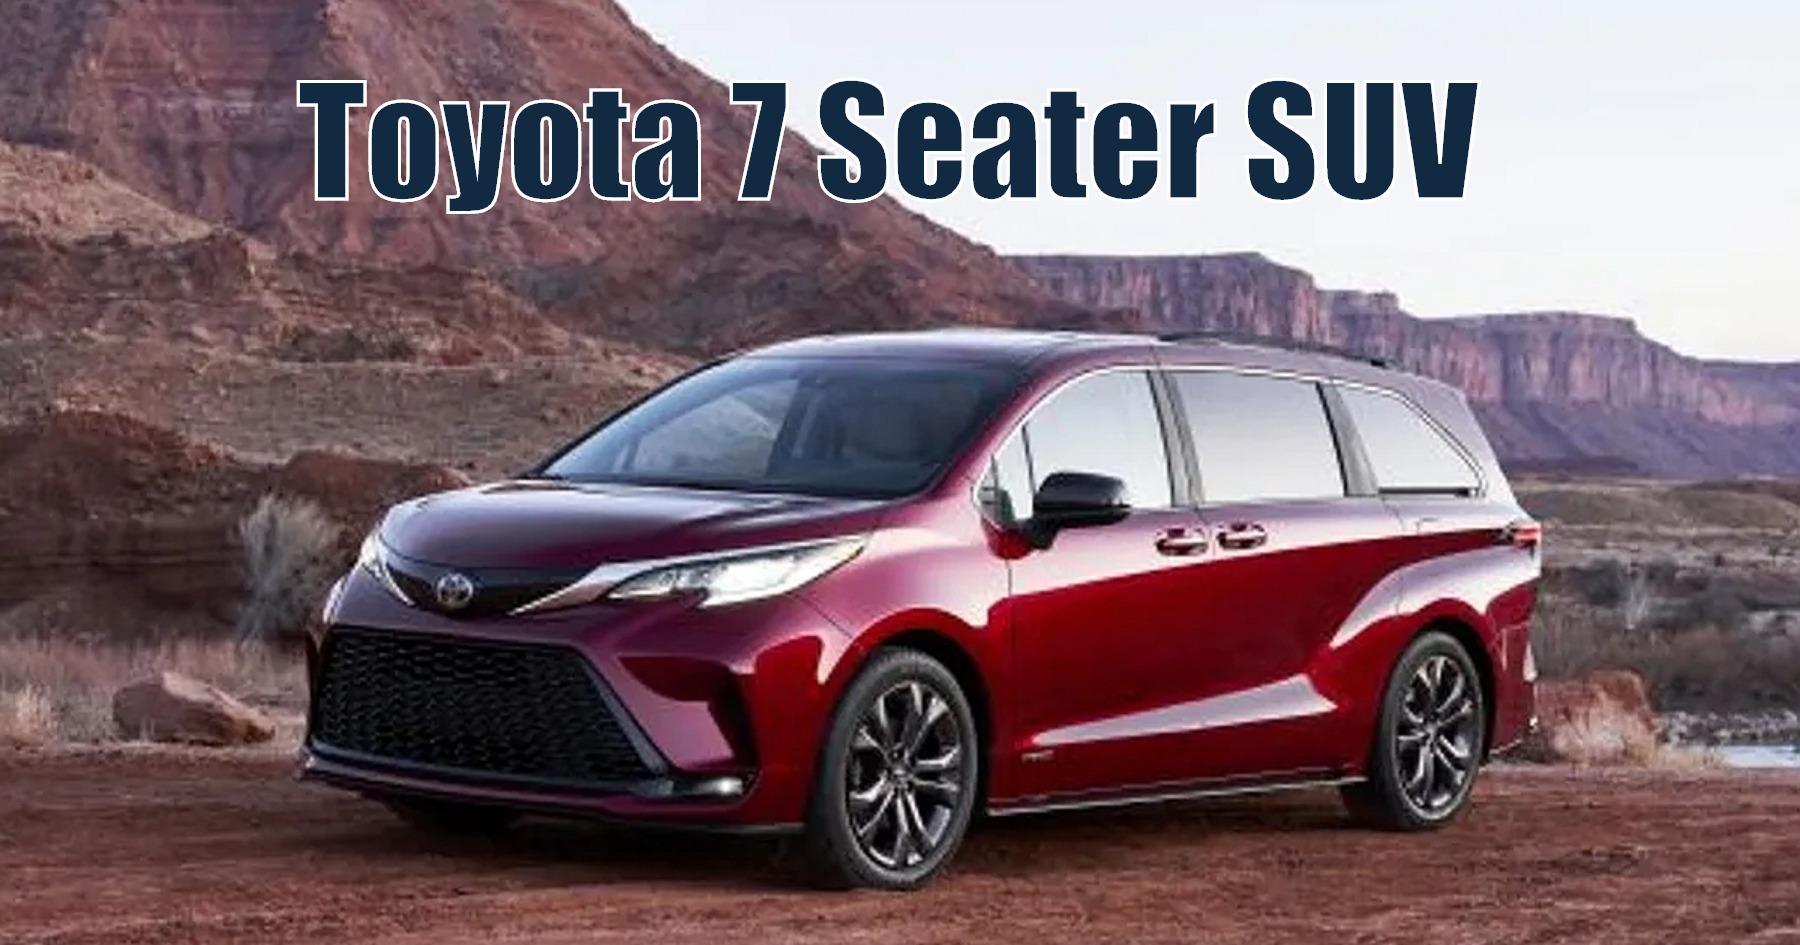 Toyota 7 Seater SUV 1